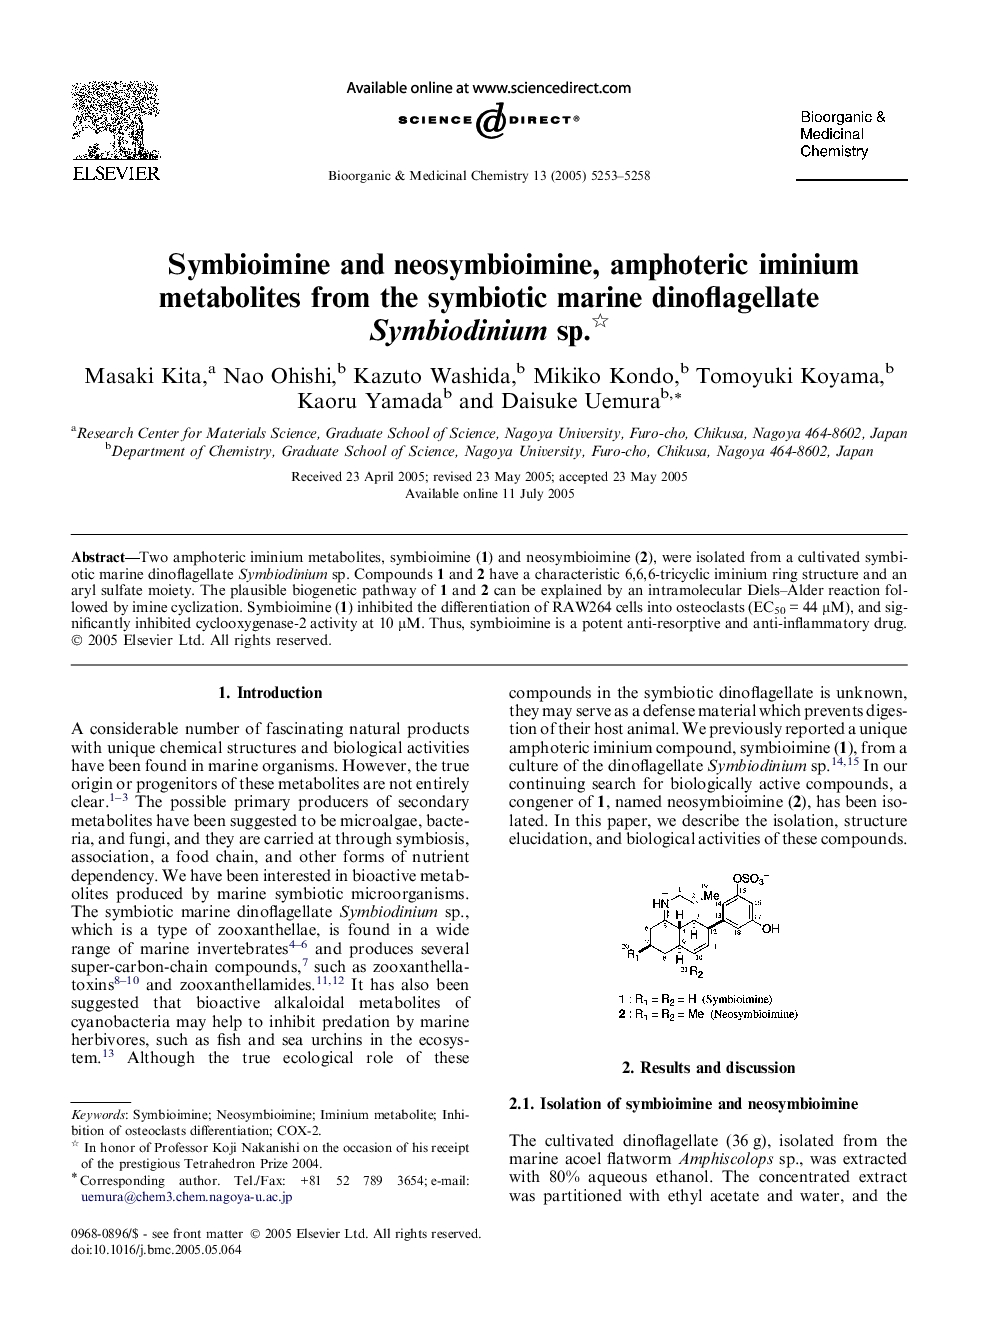 Symbioimine and neosymbioimine, amphoteric iminium metabolites from the symbiotic marine dinoflagellate Symbiodinium sp. 